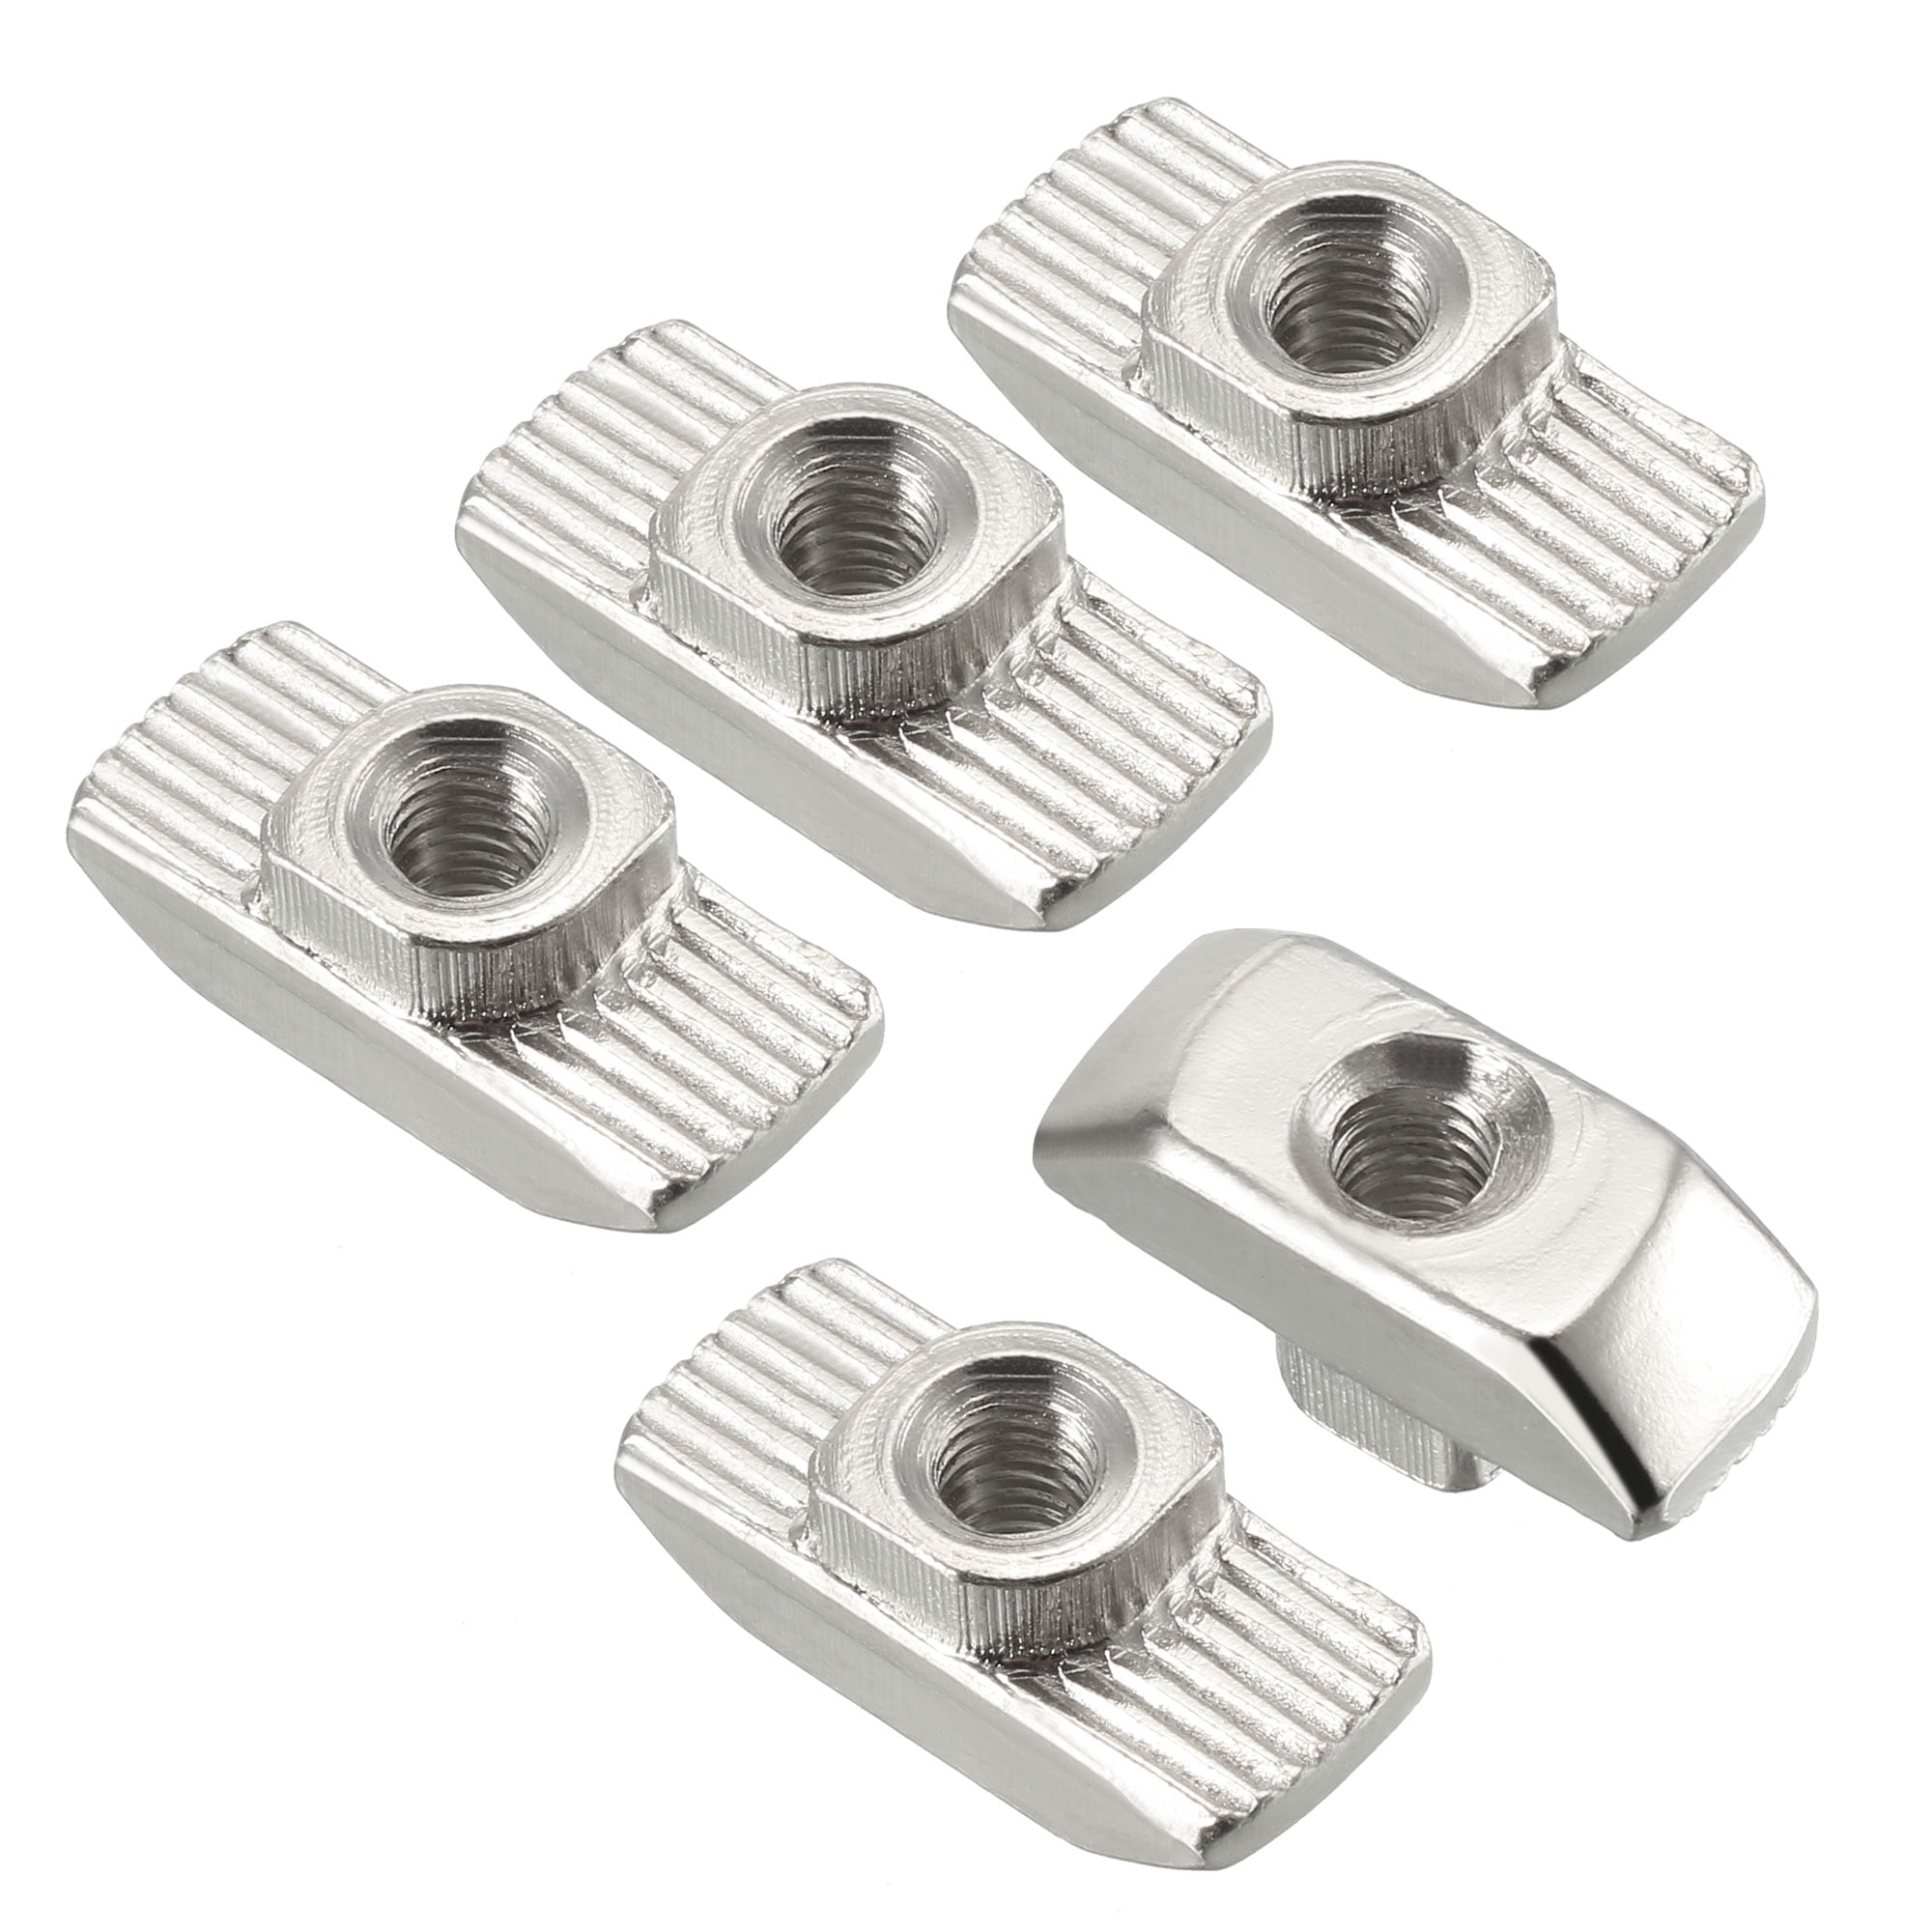 Details about   T-Slot Nut T Slot Nut Sliding Block Fastener Hardware For 4040 Aluminum Profiles 